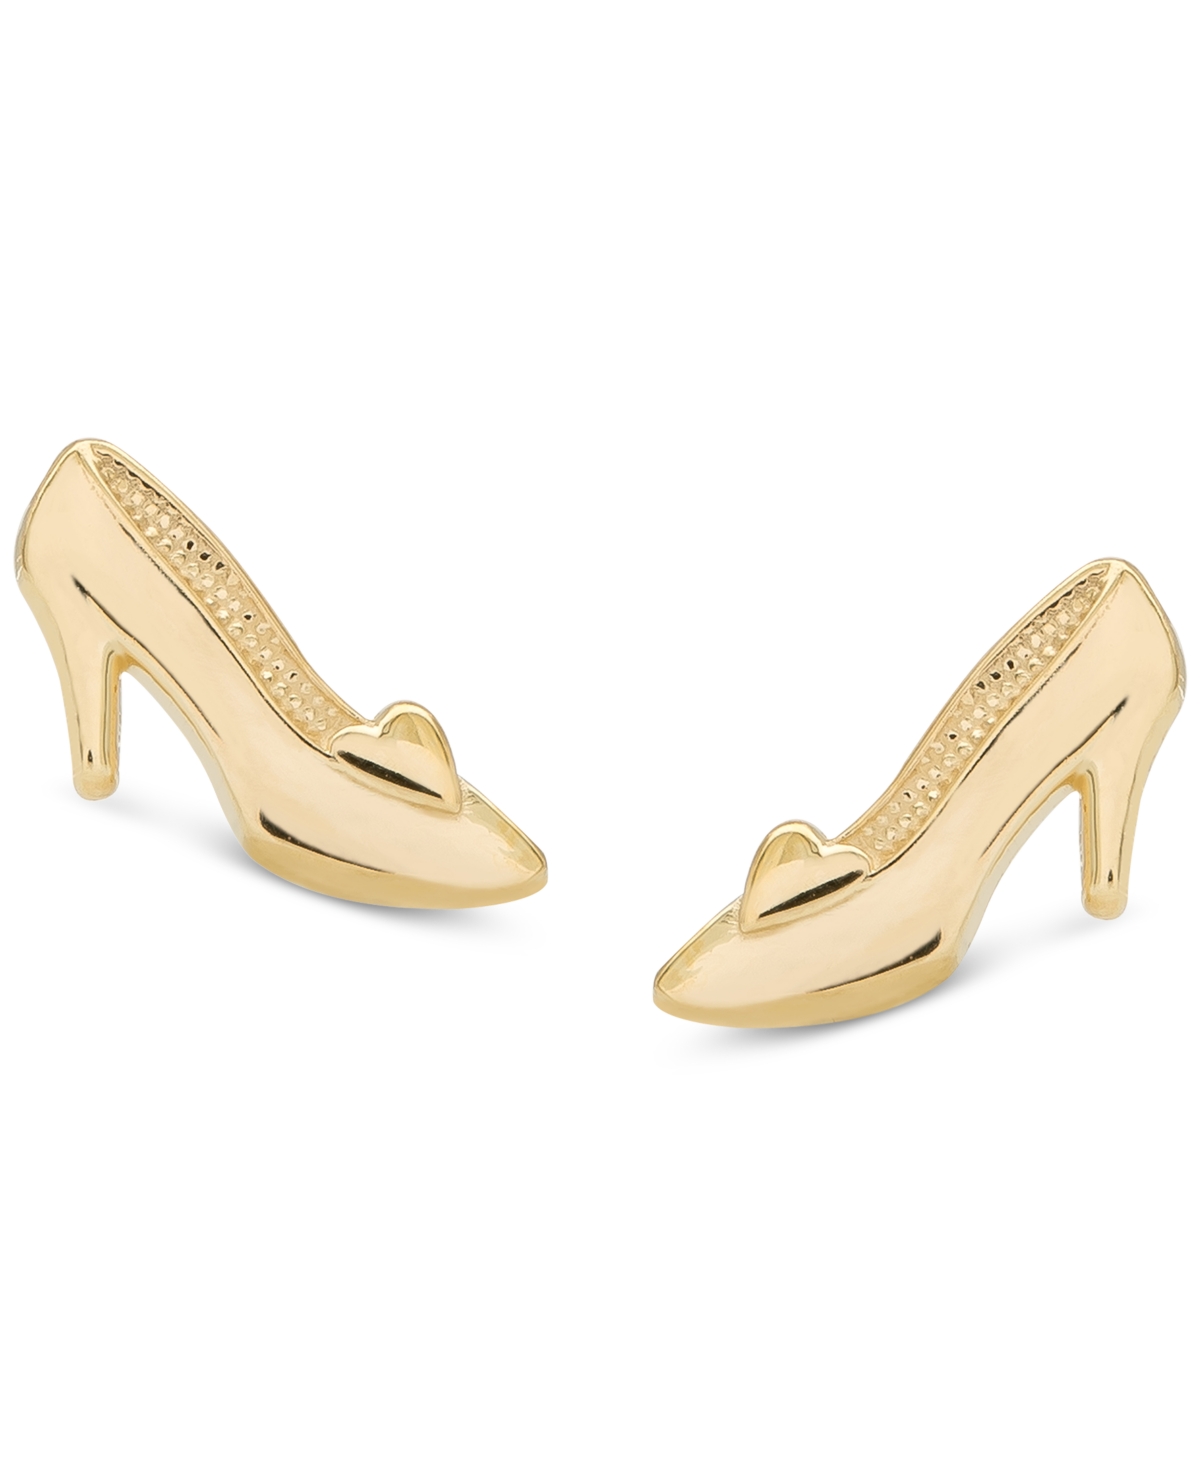 Children's Cinderella Slipper Stud Earrings in 14k Gold - Yellow Gold